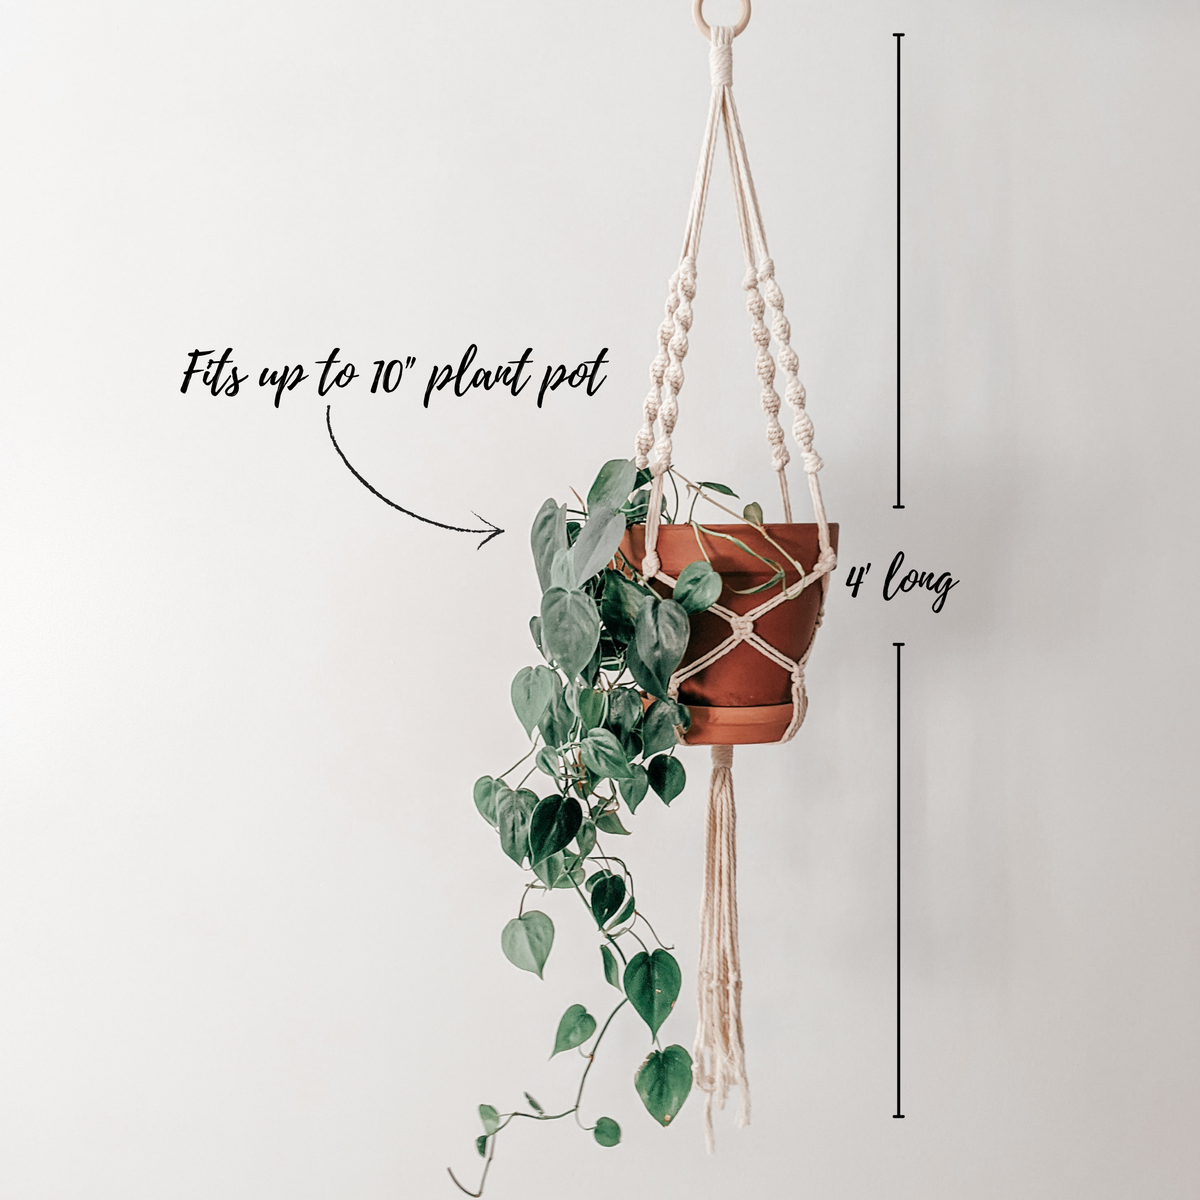 D.I.Y Macrame Plant Hanger Kit - make your own plant hanger